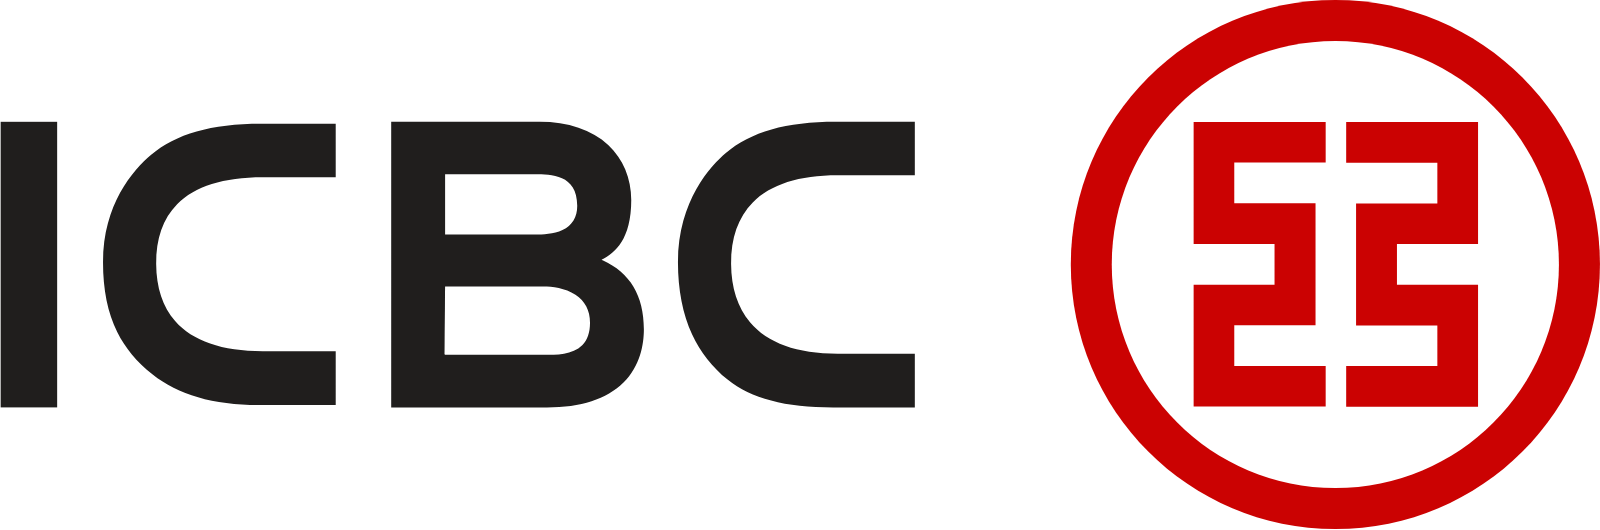 ICBC logo large (transparent PNG)